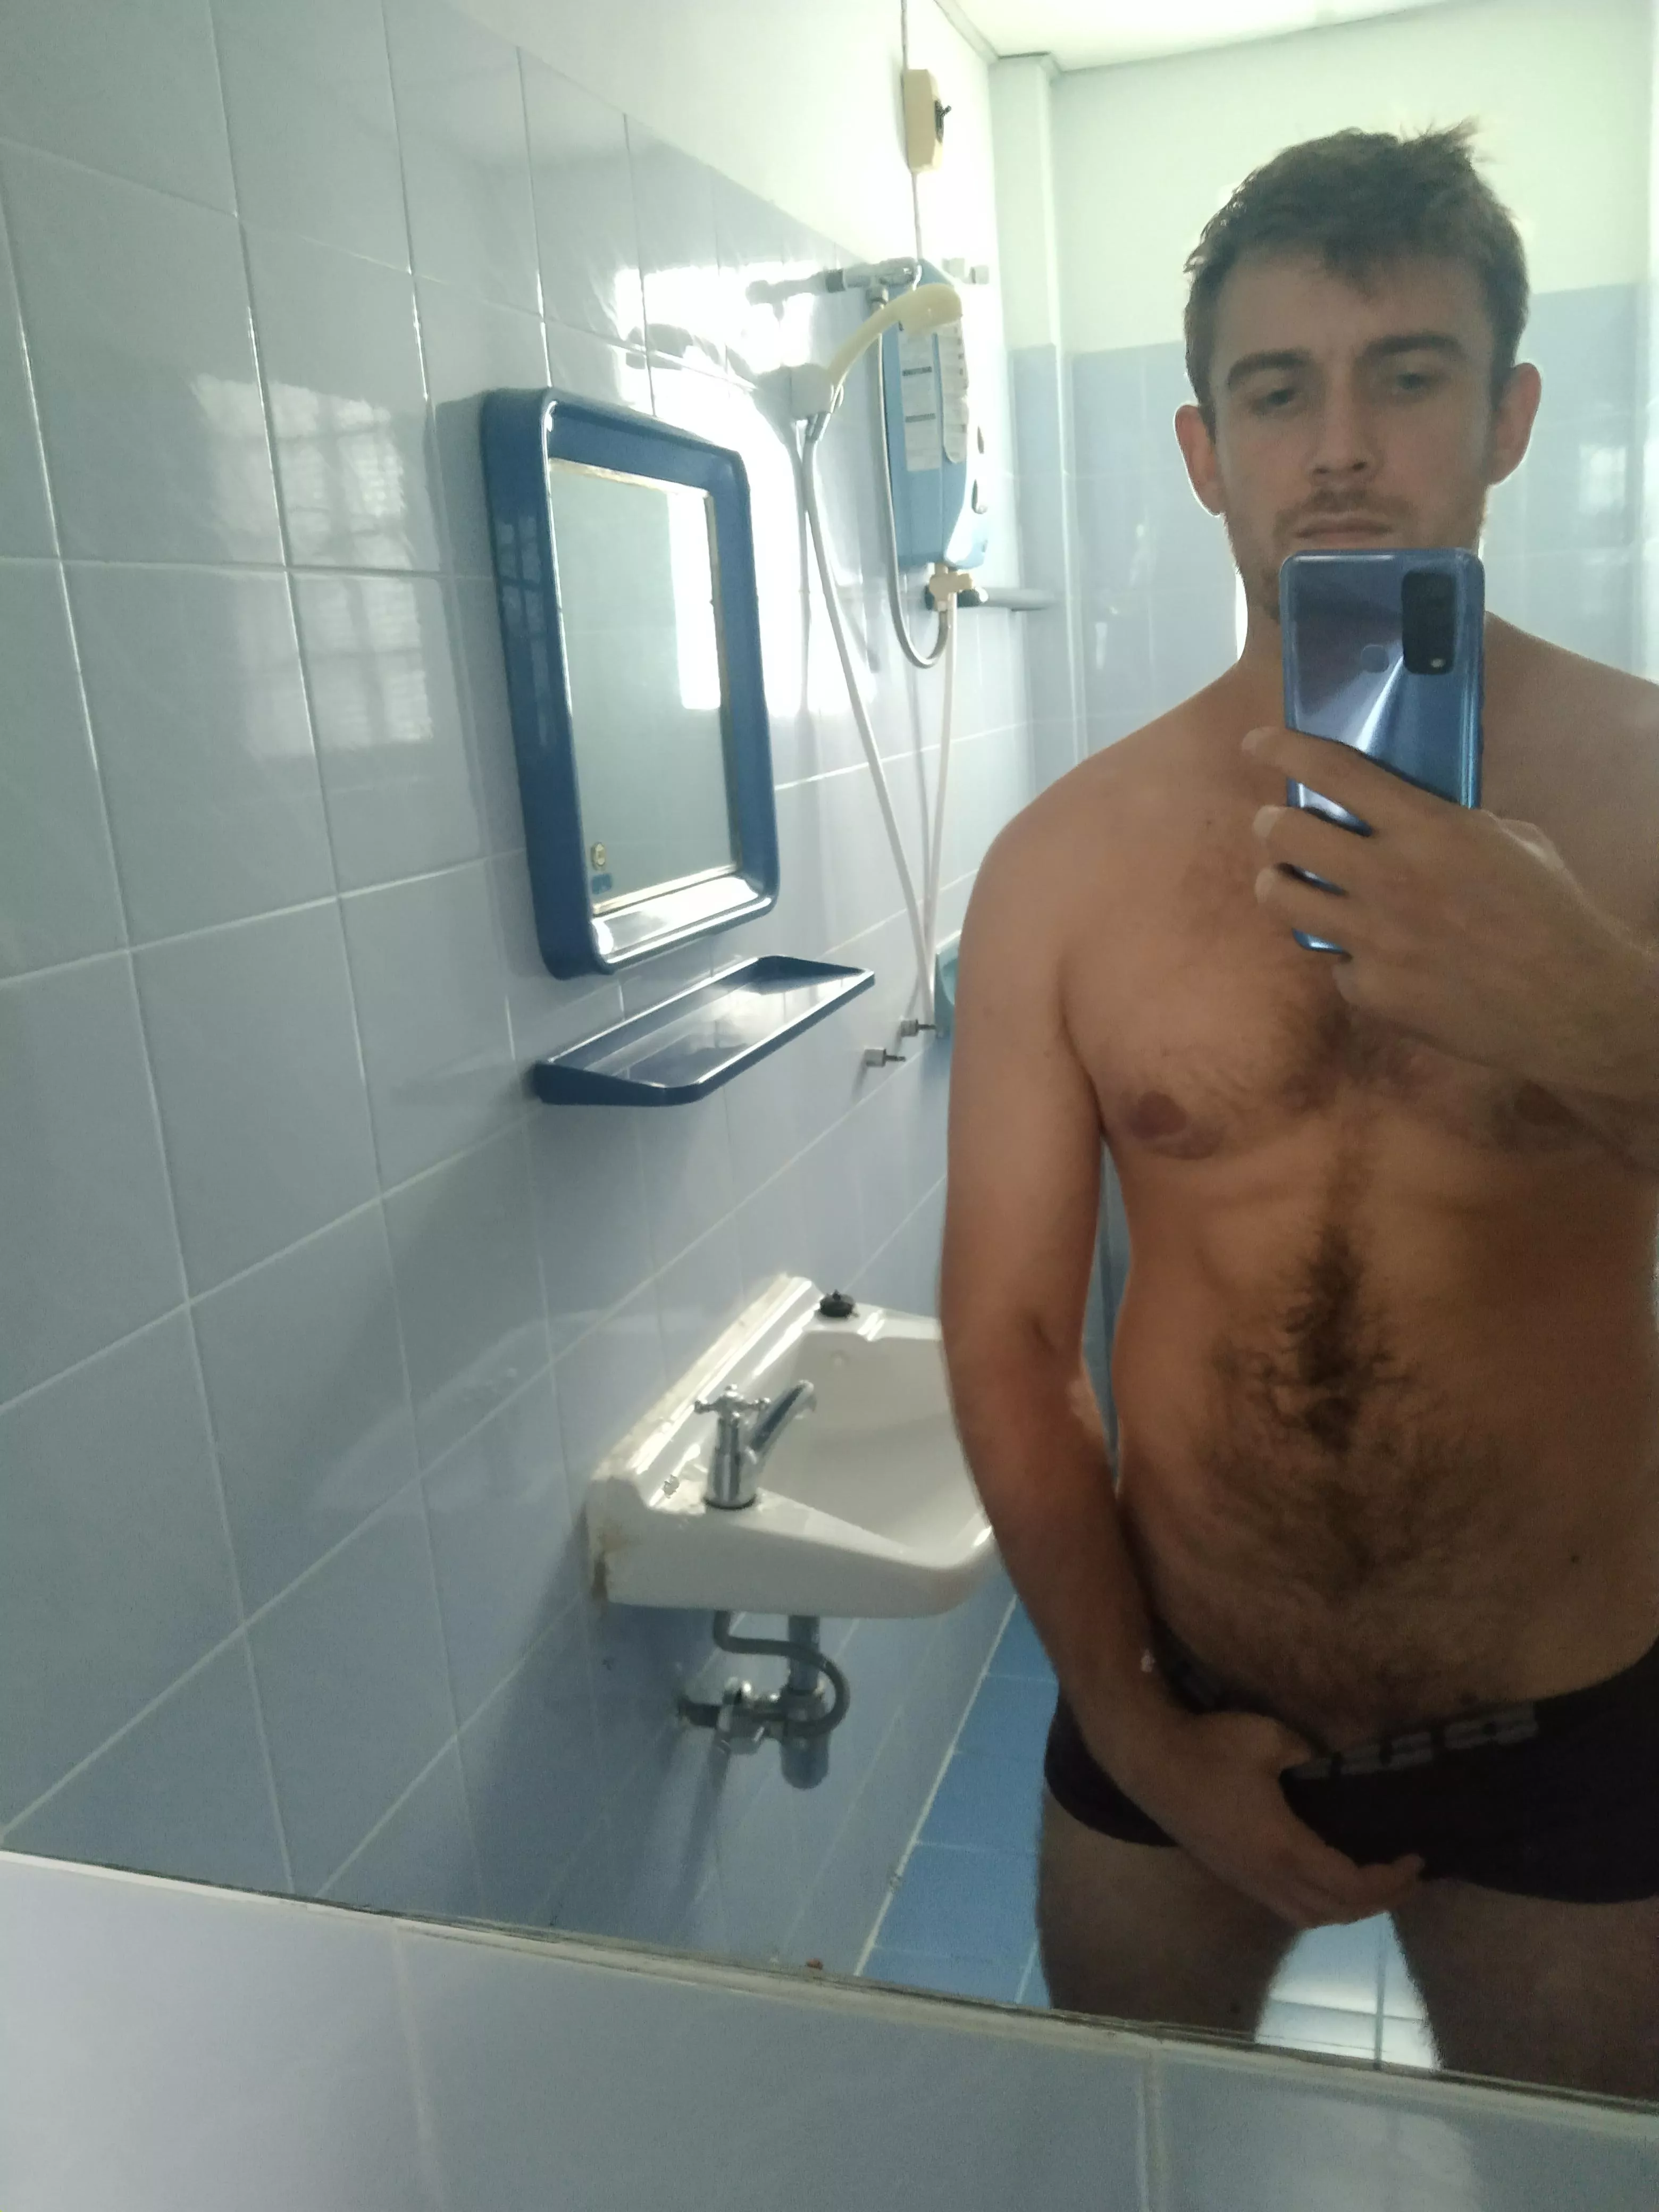 Nudes GaybrosGoneWild NUDE PICS ORG